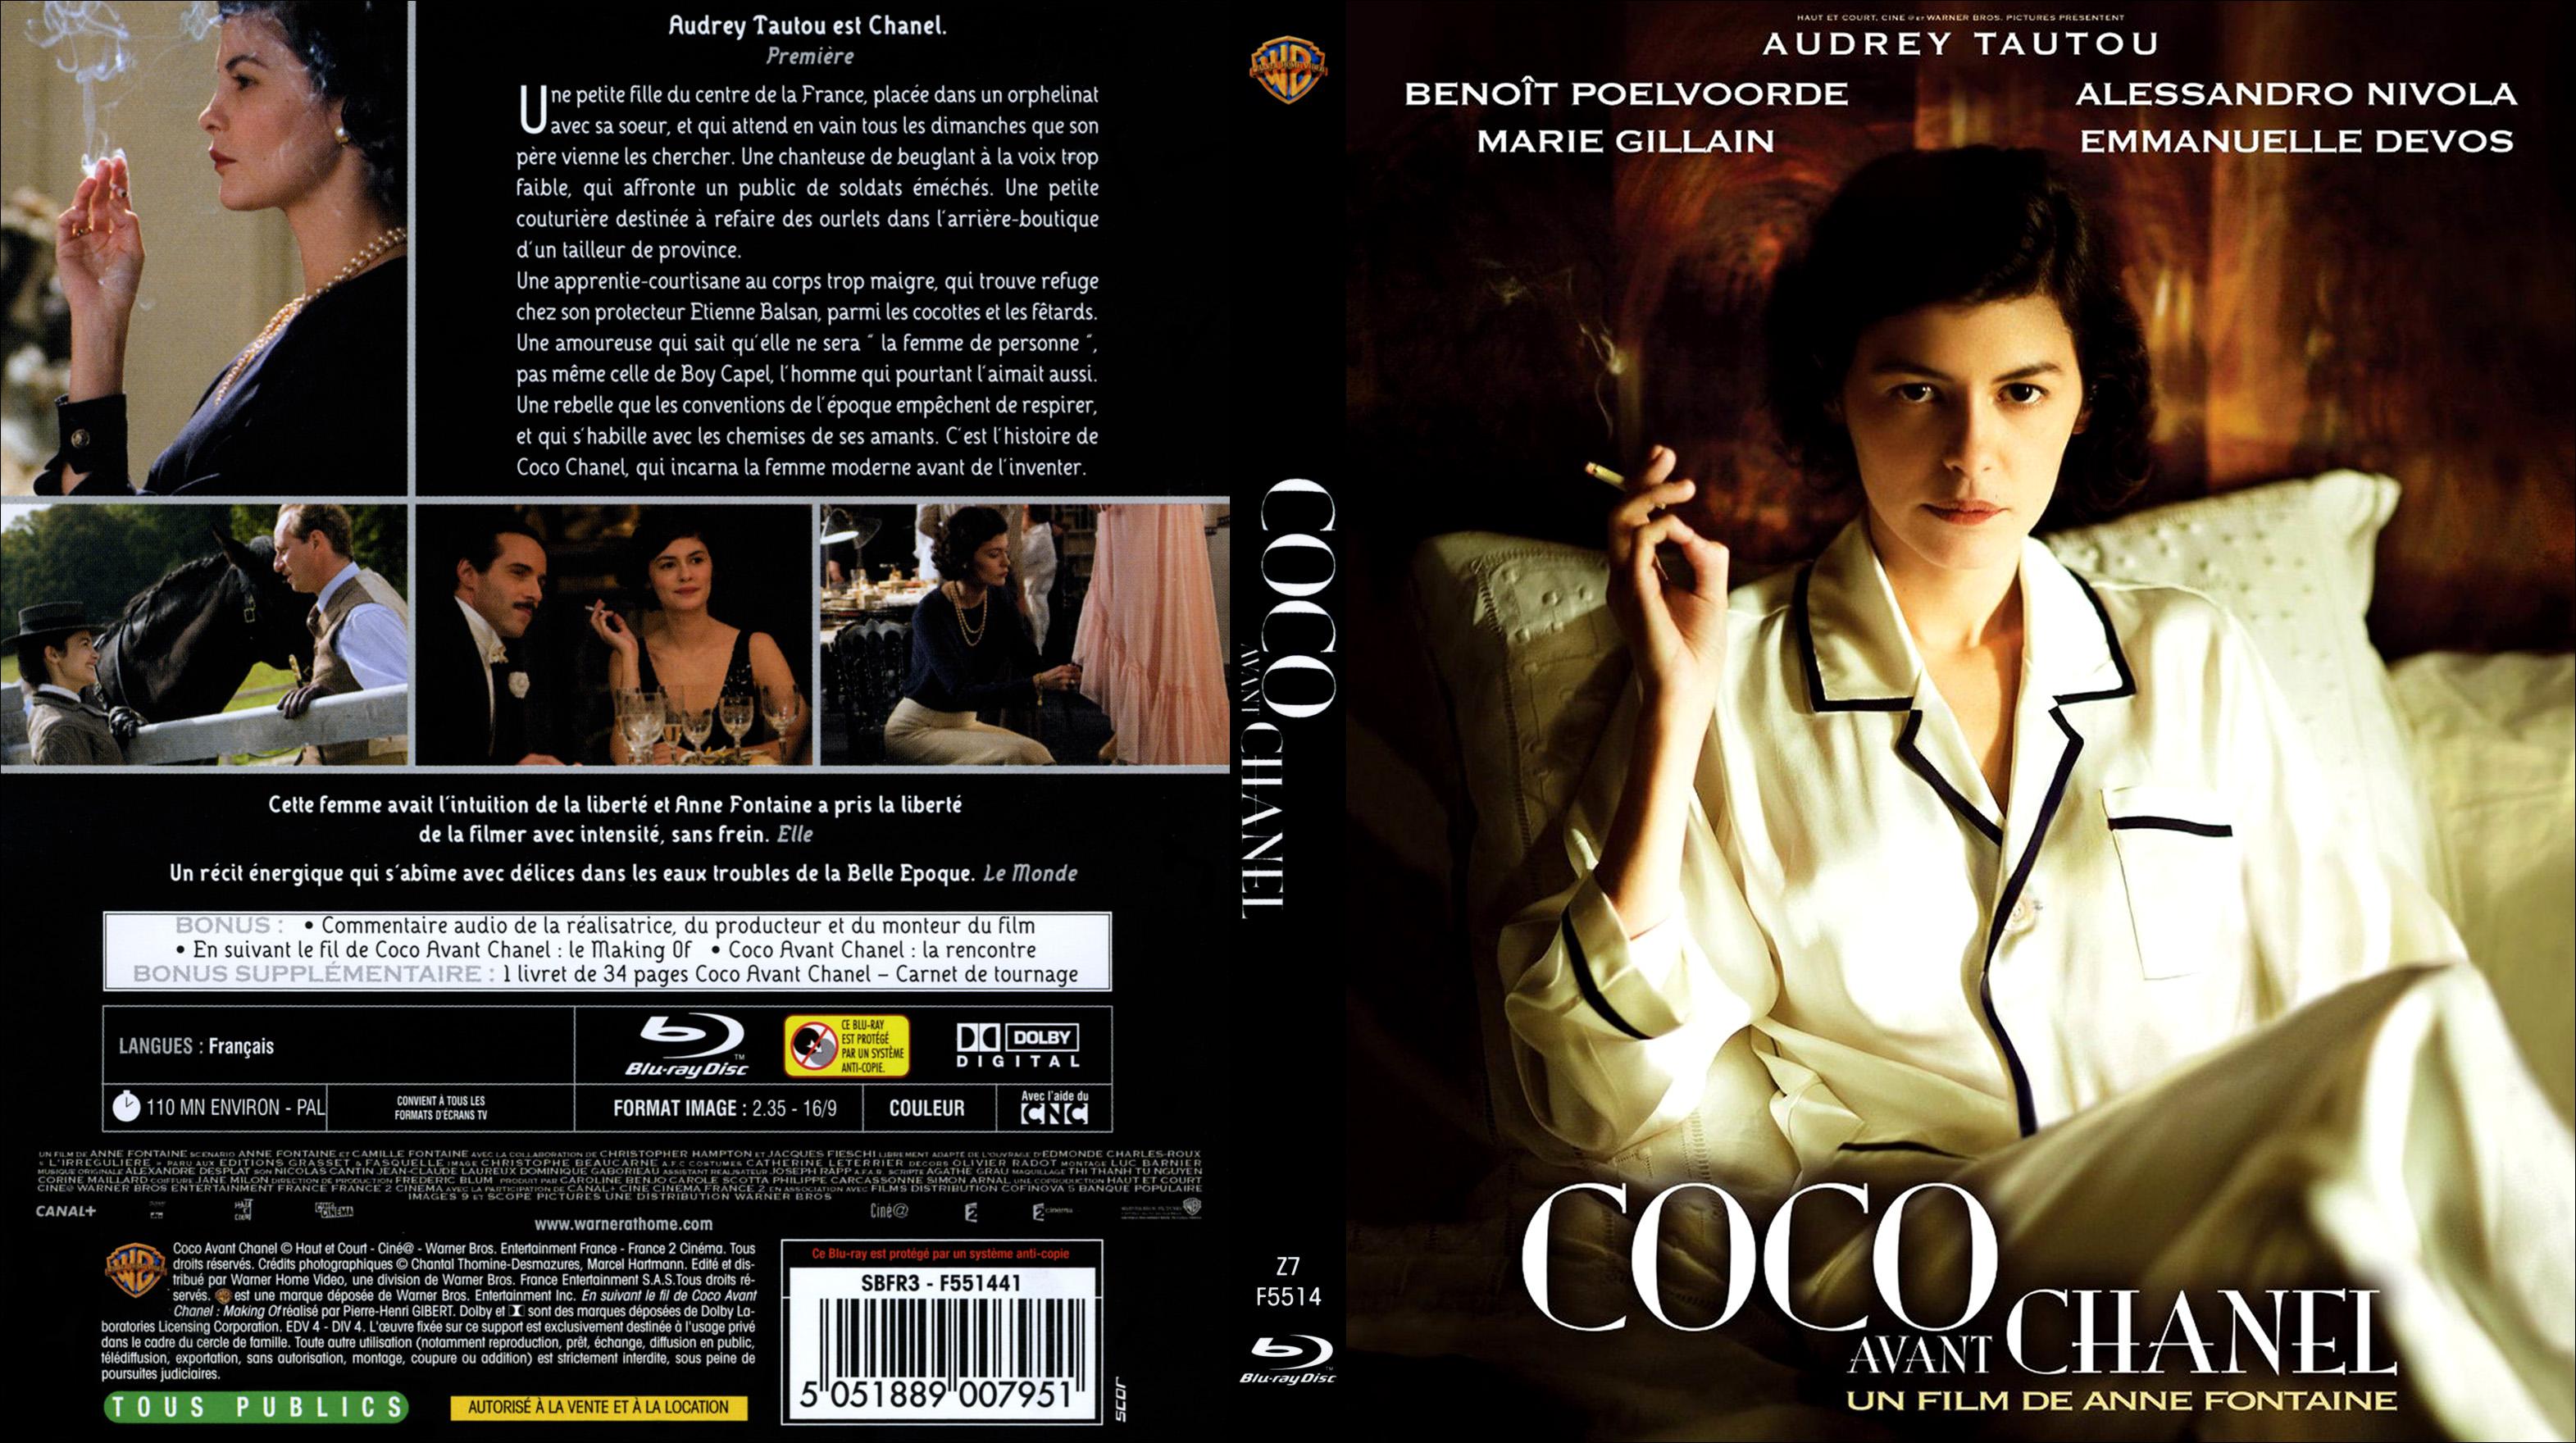 Jaquette DVD Coco avant Chanel (BLU-RAY)